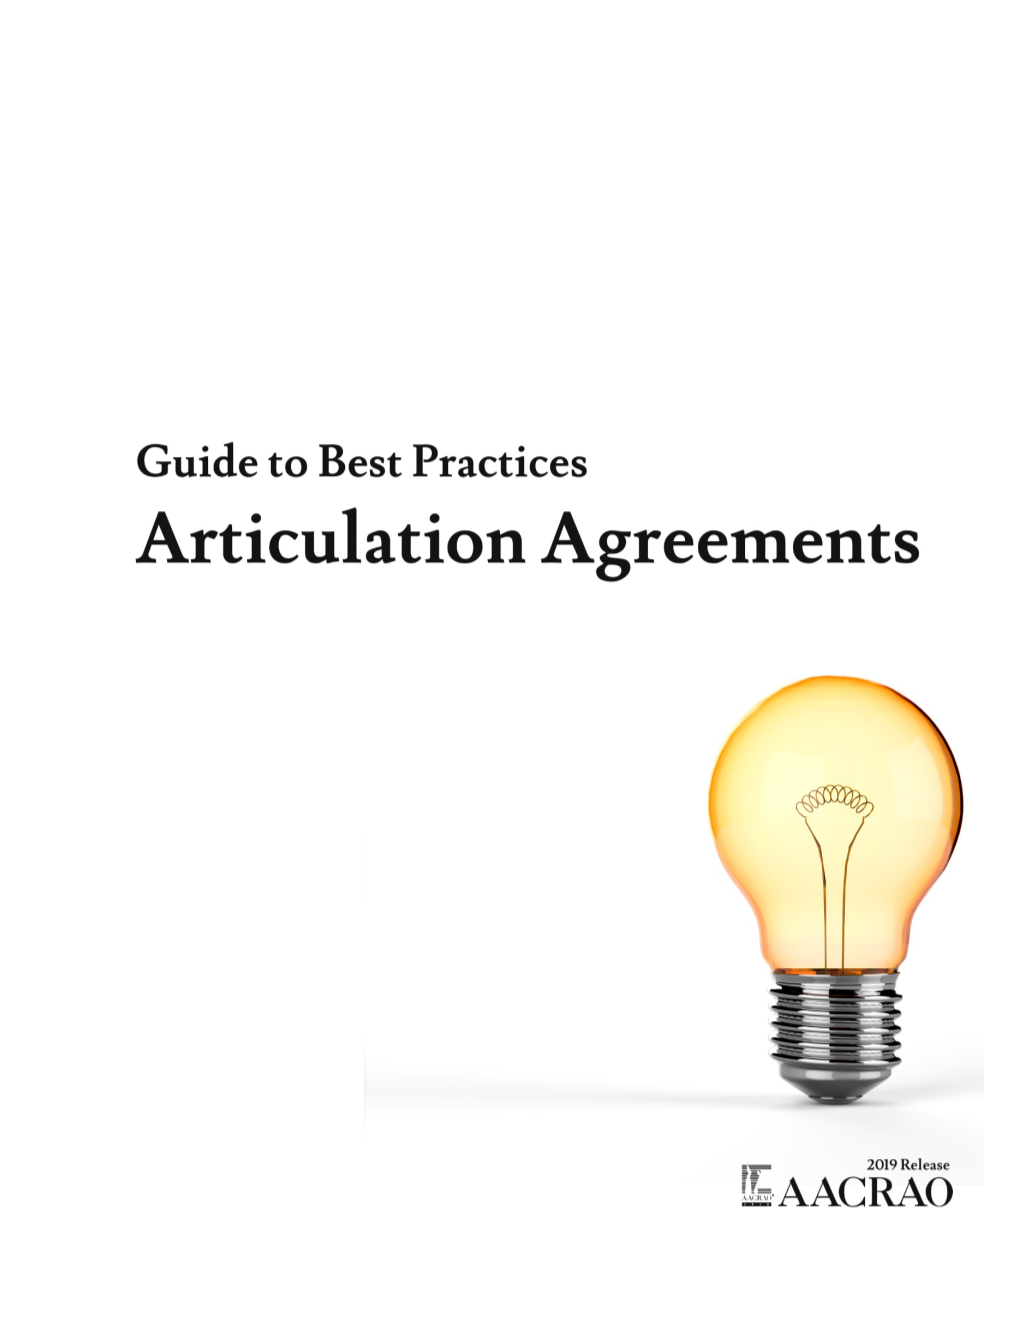 Articulation Agreements?